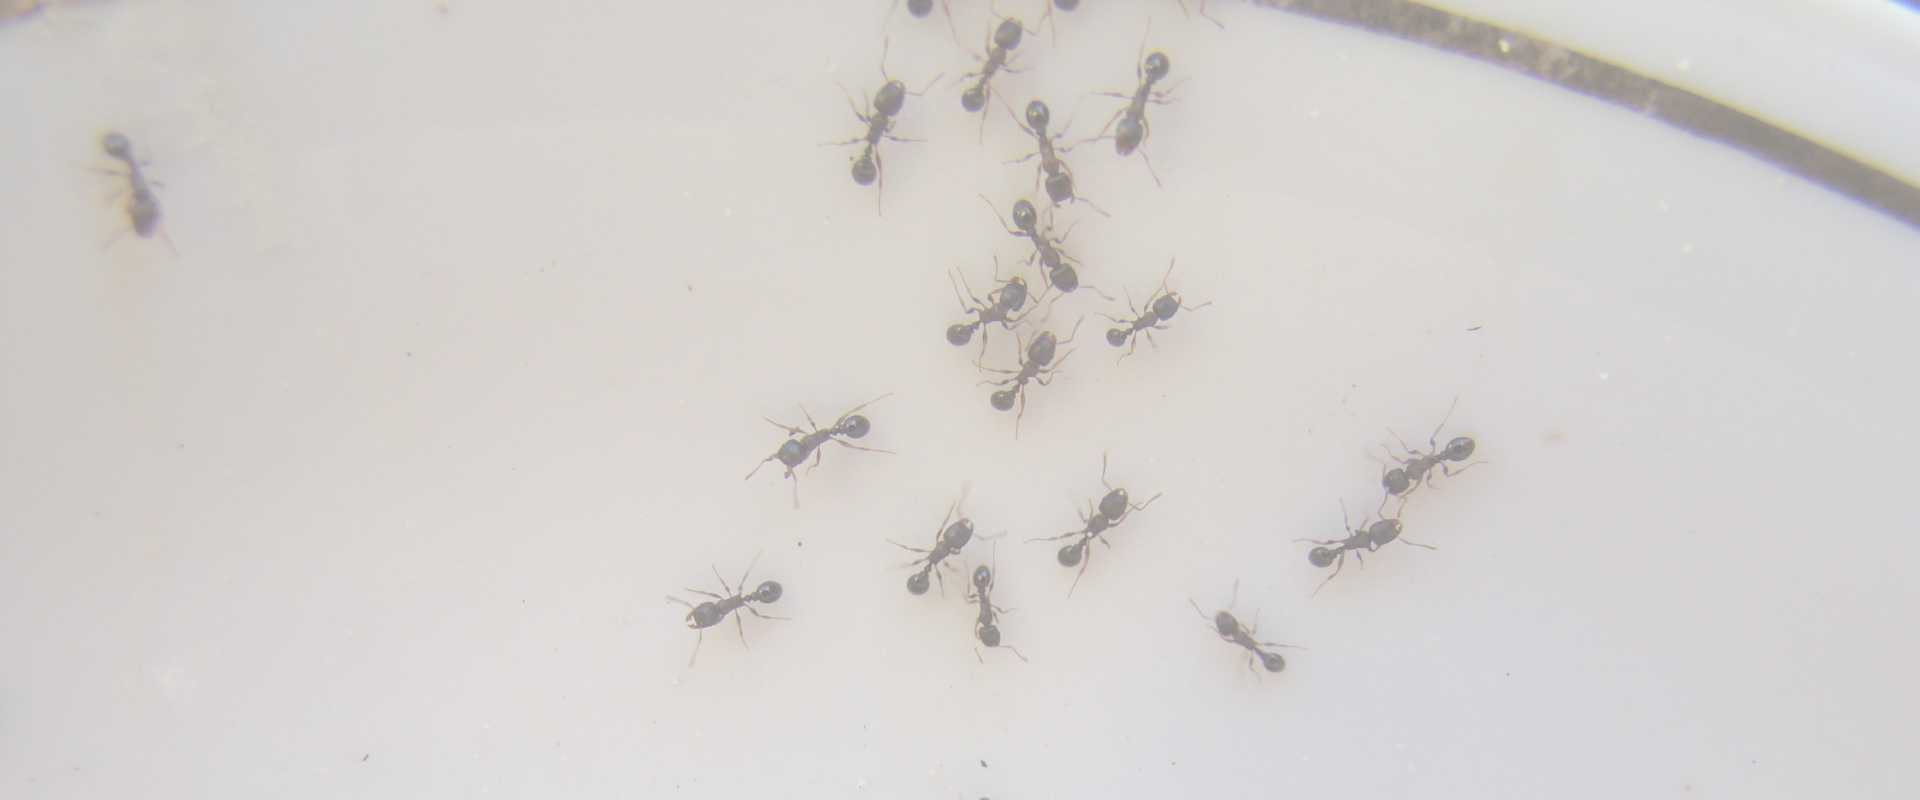 pest control in cockeysville md